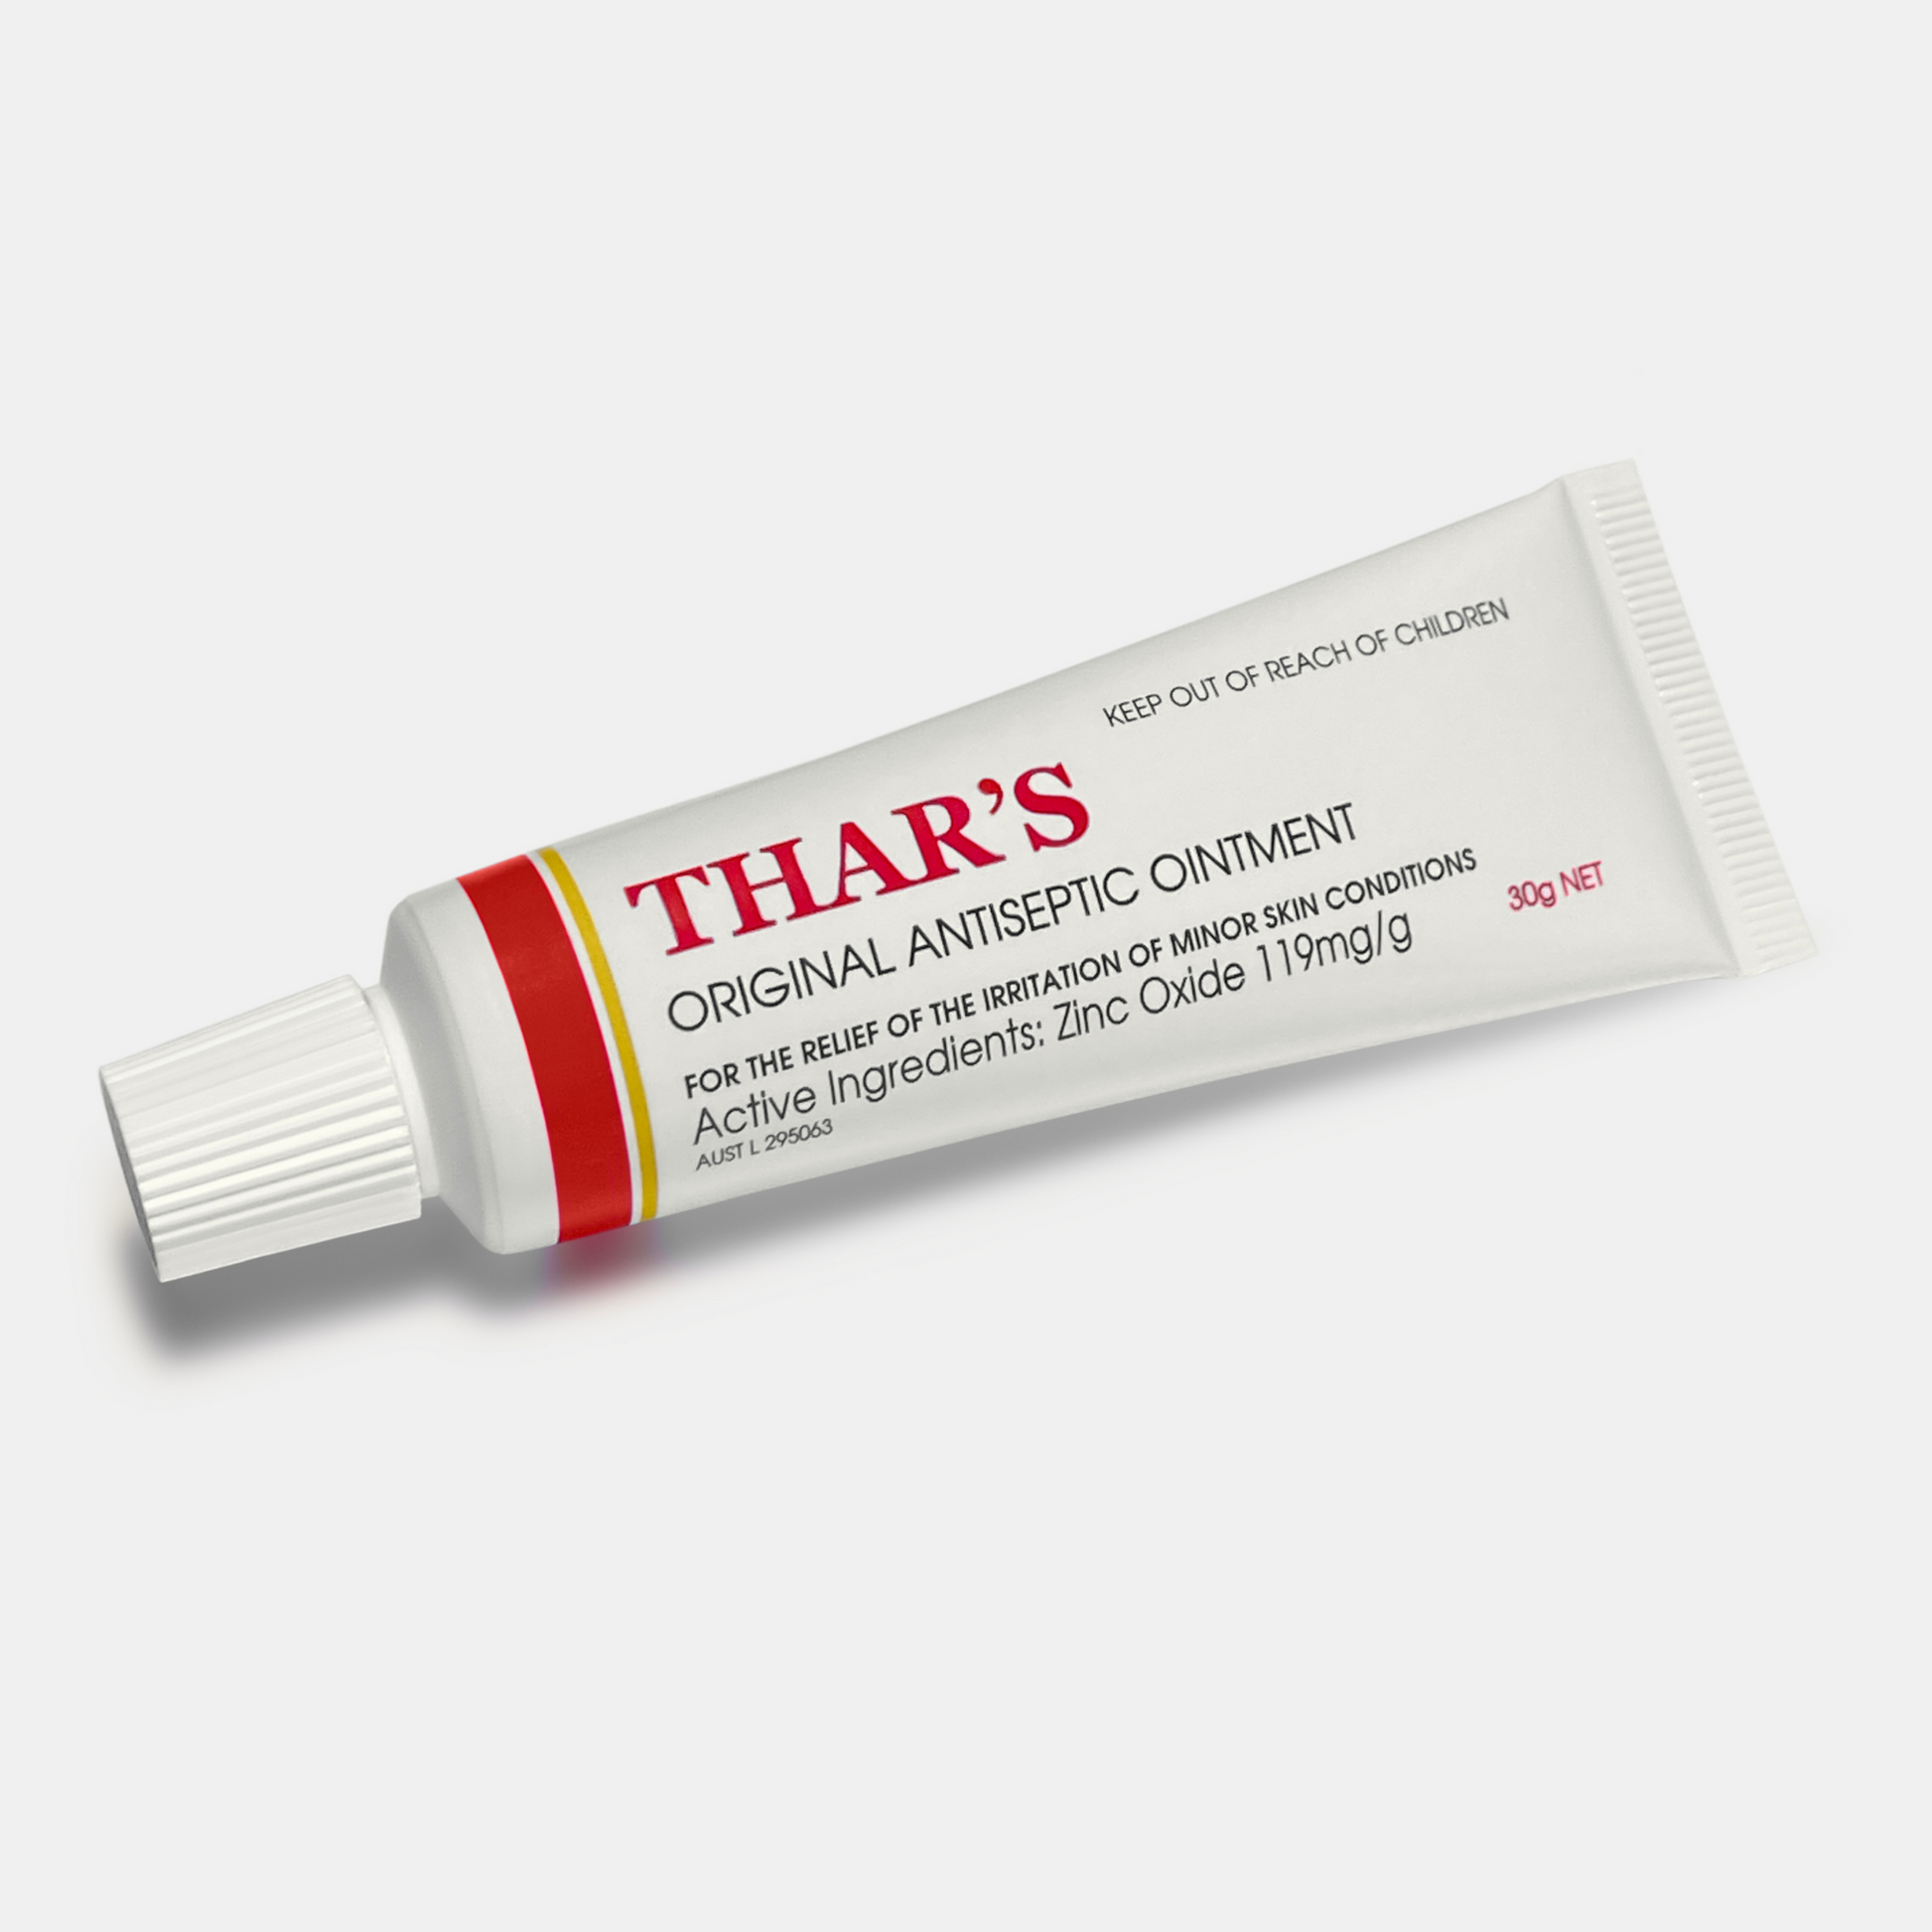 Thar's Original Antiseptic Ointment 30g Tube